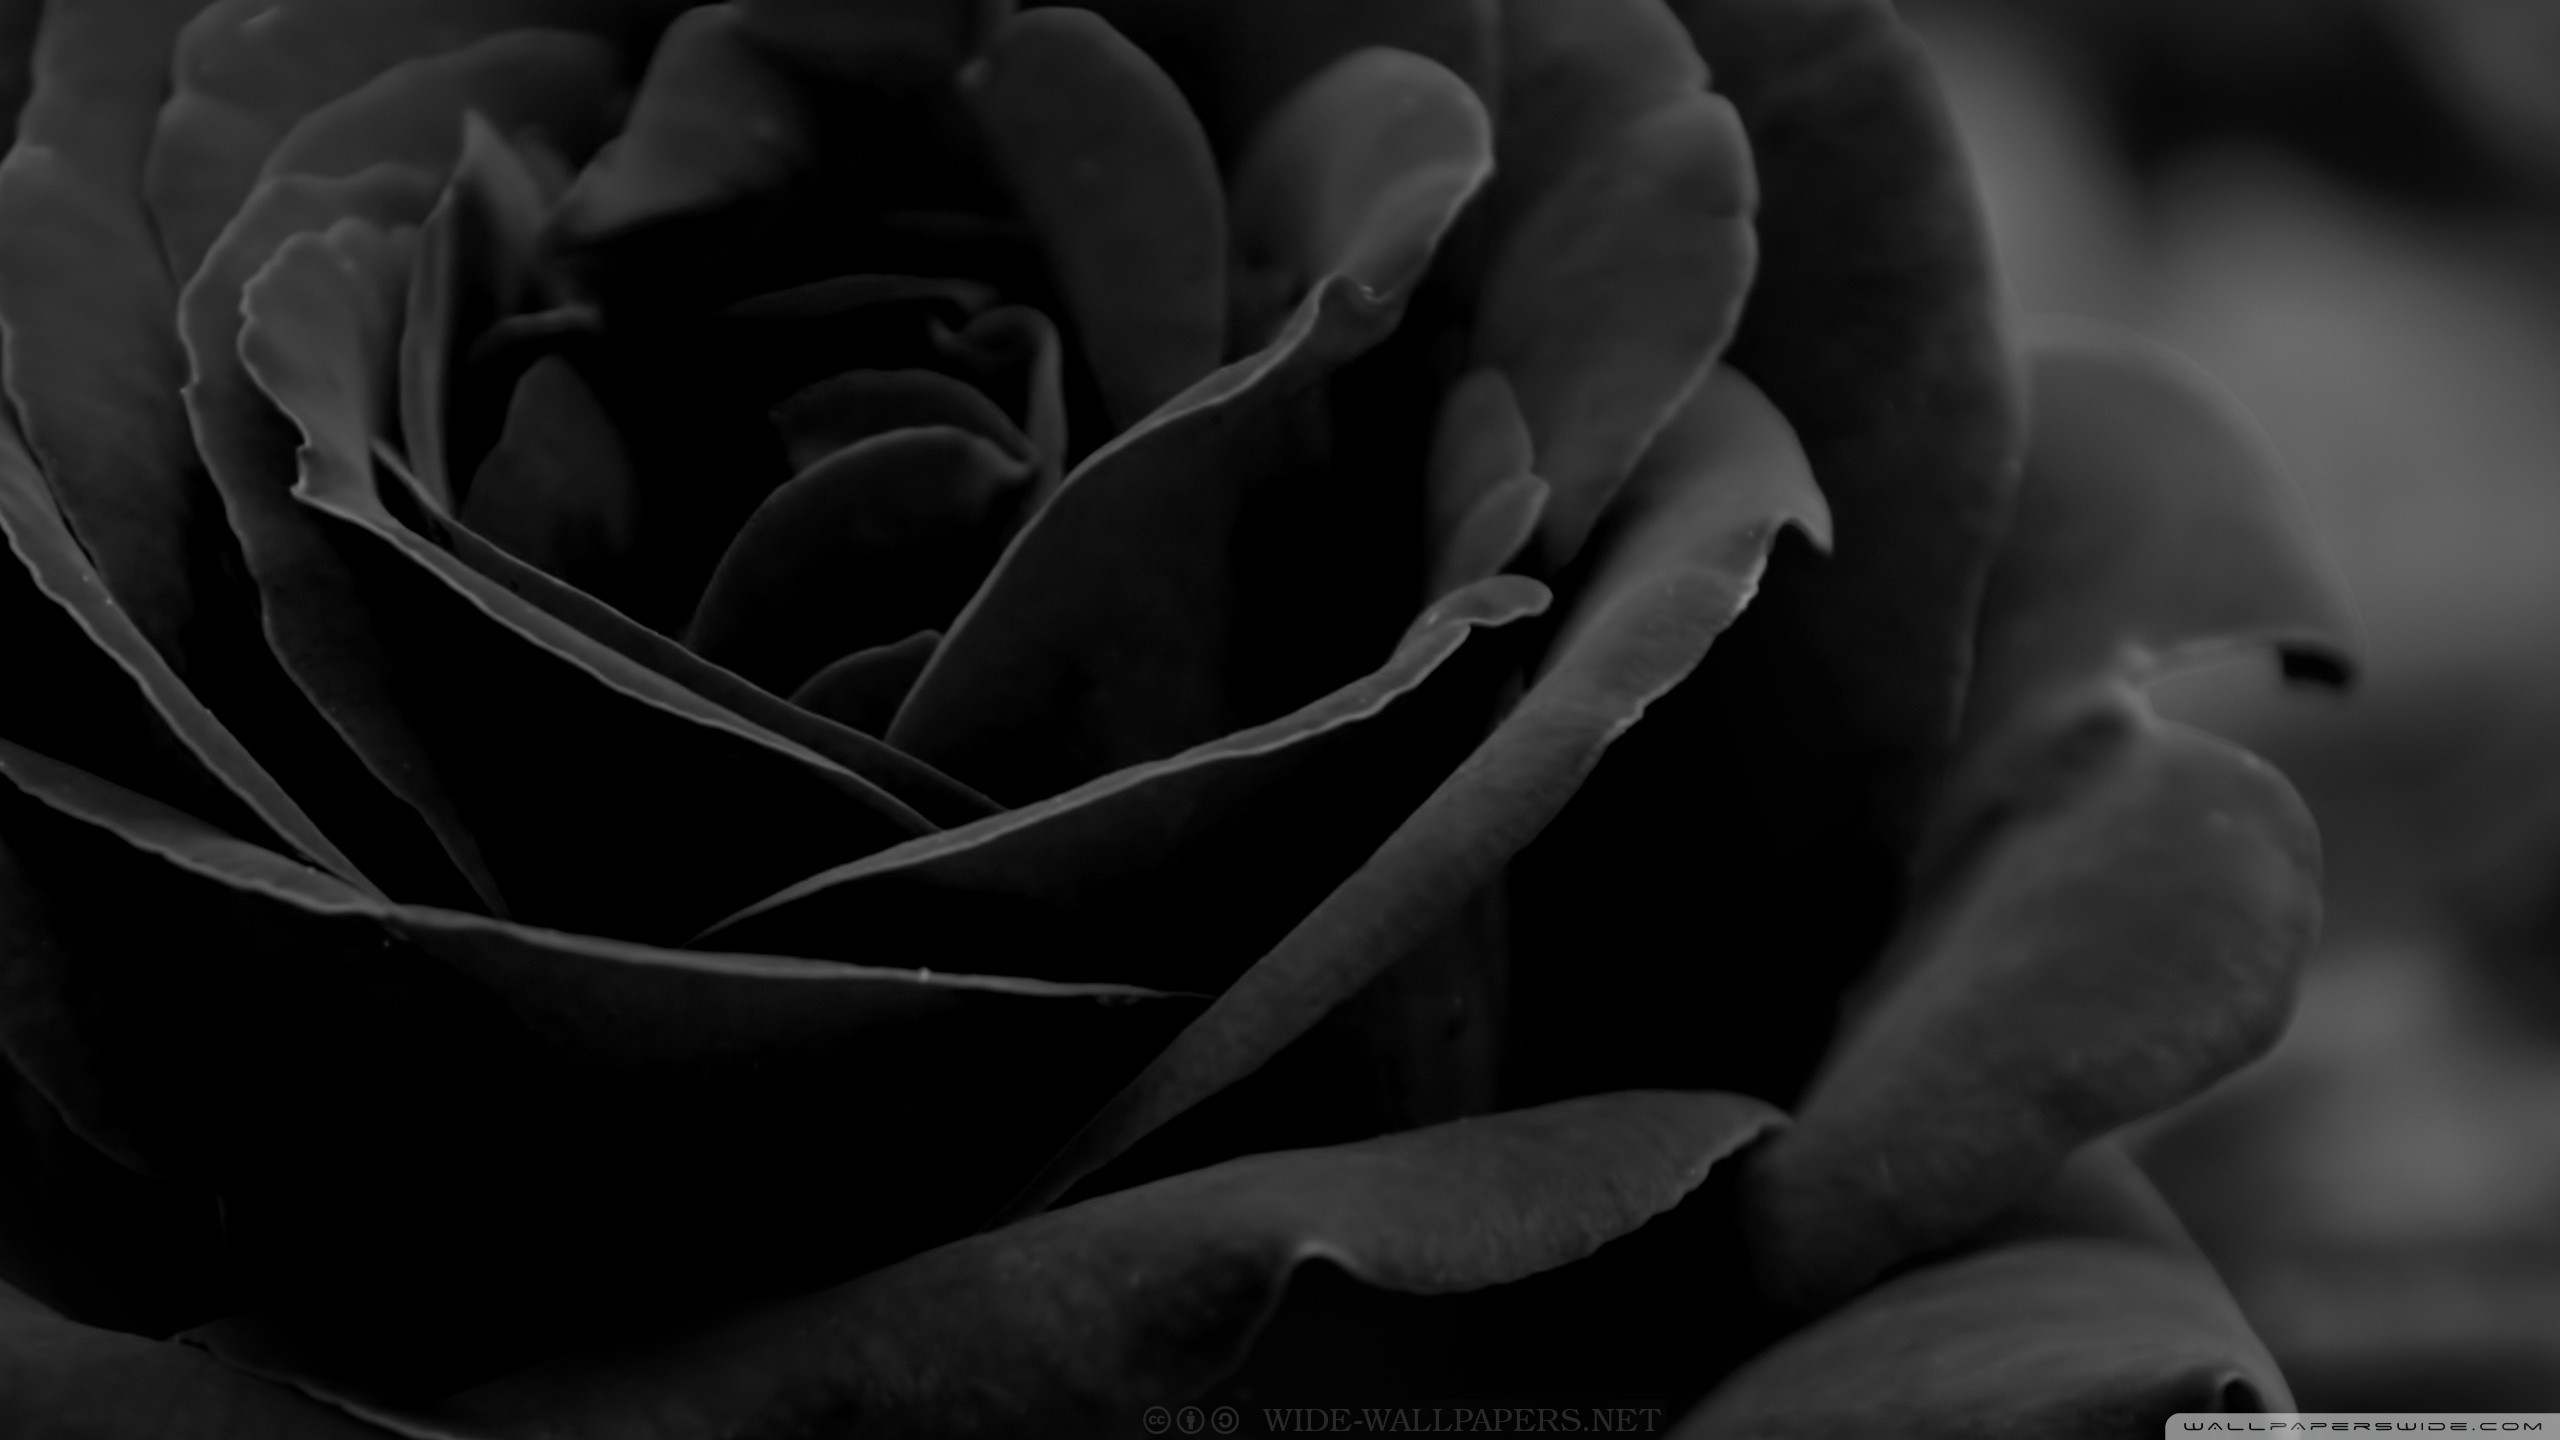 2560x1440 Image from http://wallpaperswide.com/download/black_rose_3-wallpaper-.jpg.  | BLACK ROSES AND HEART | Pinterest | Black roses